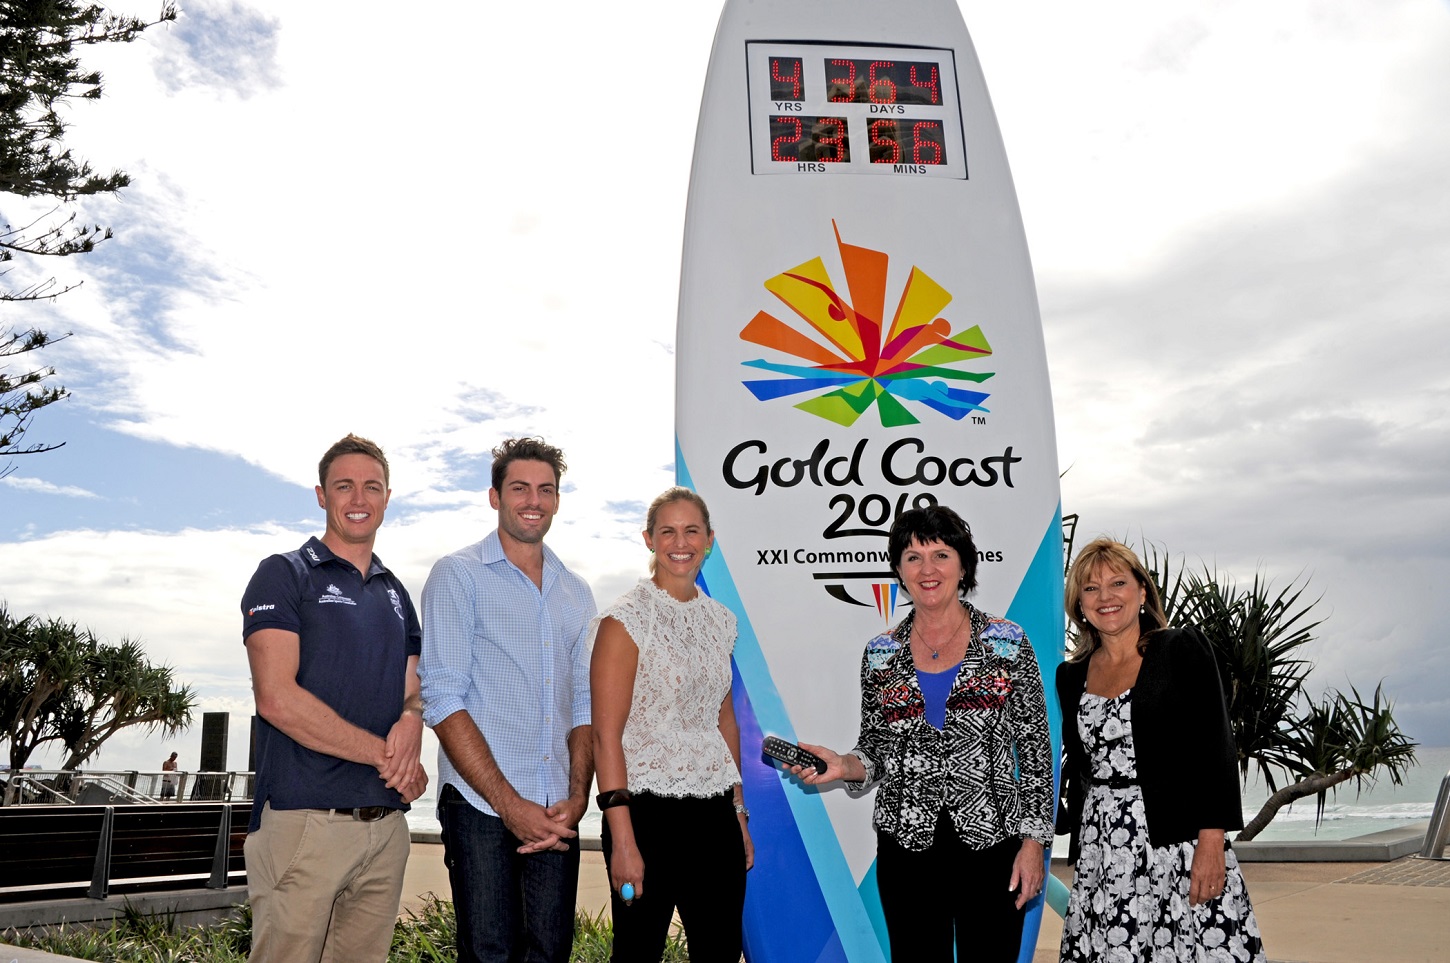 New Gold Coast 2018 countdown clock